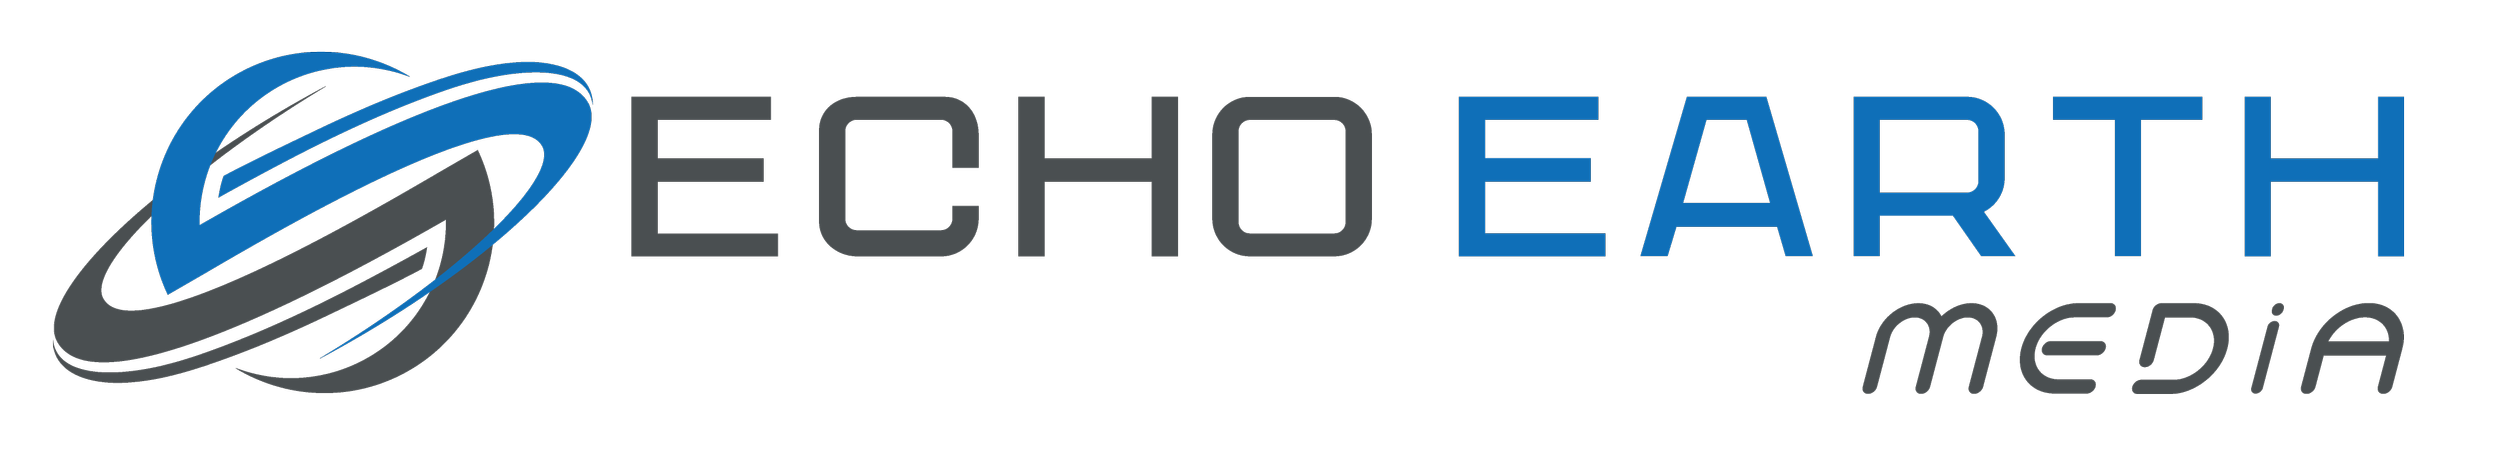 Echo-Earth-Media-Logo.png